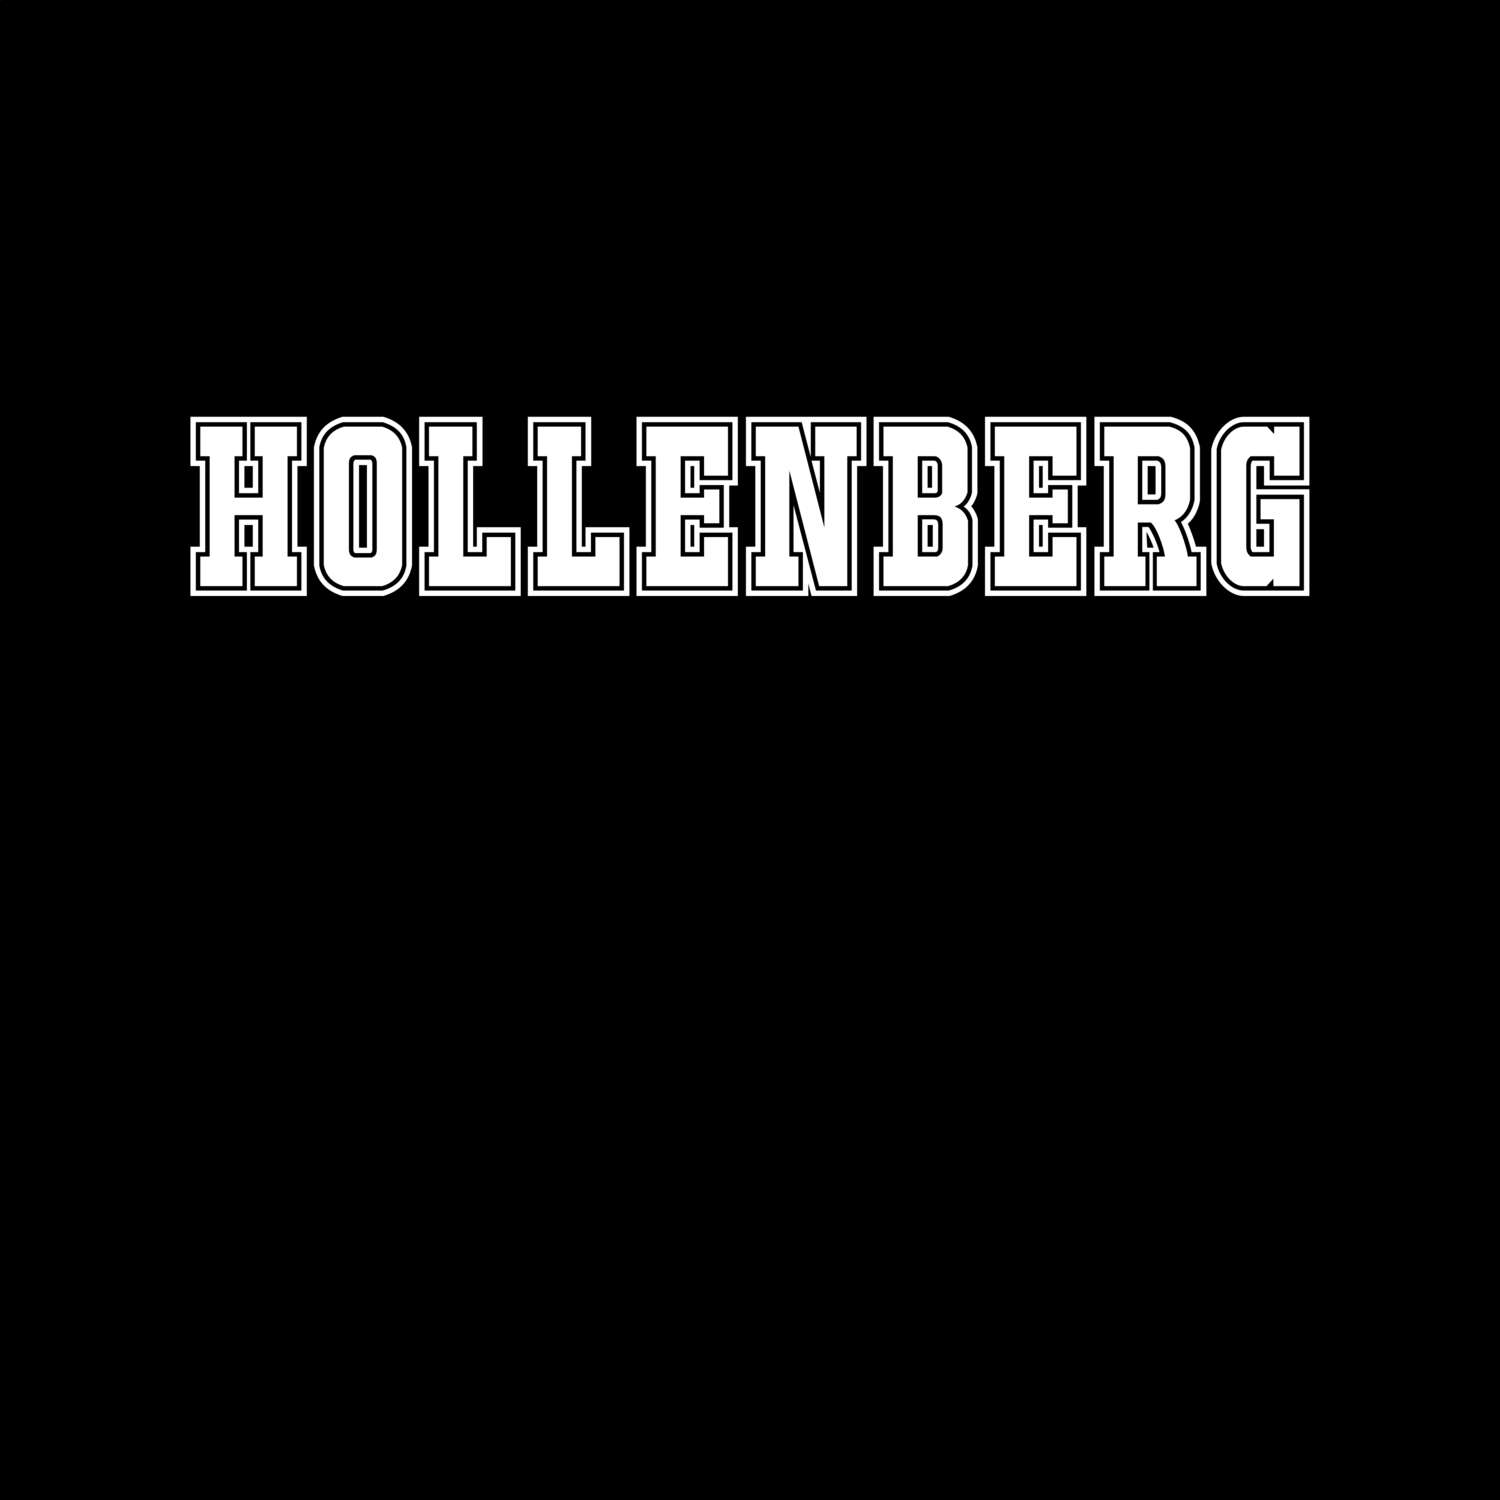 Hollenberg T-Shirt »Classic«